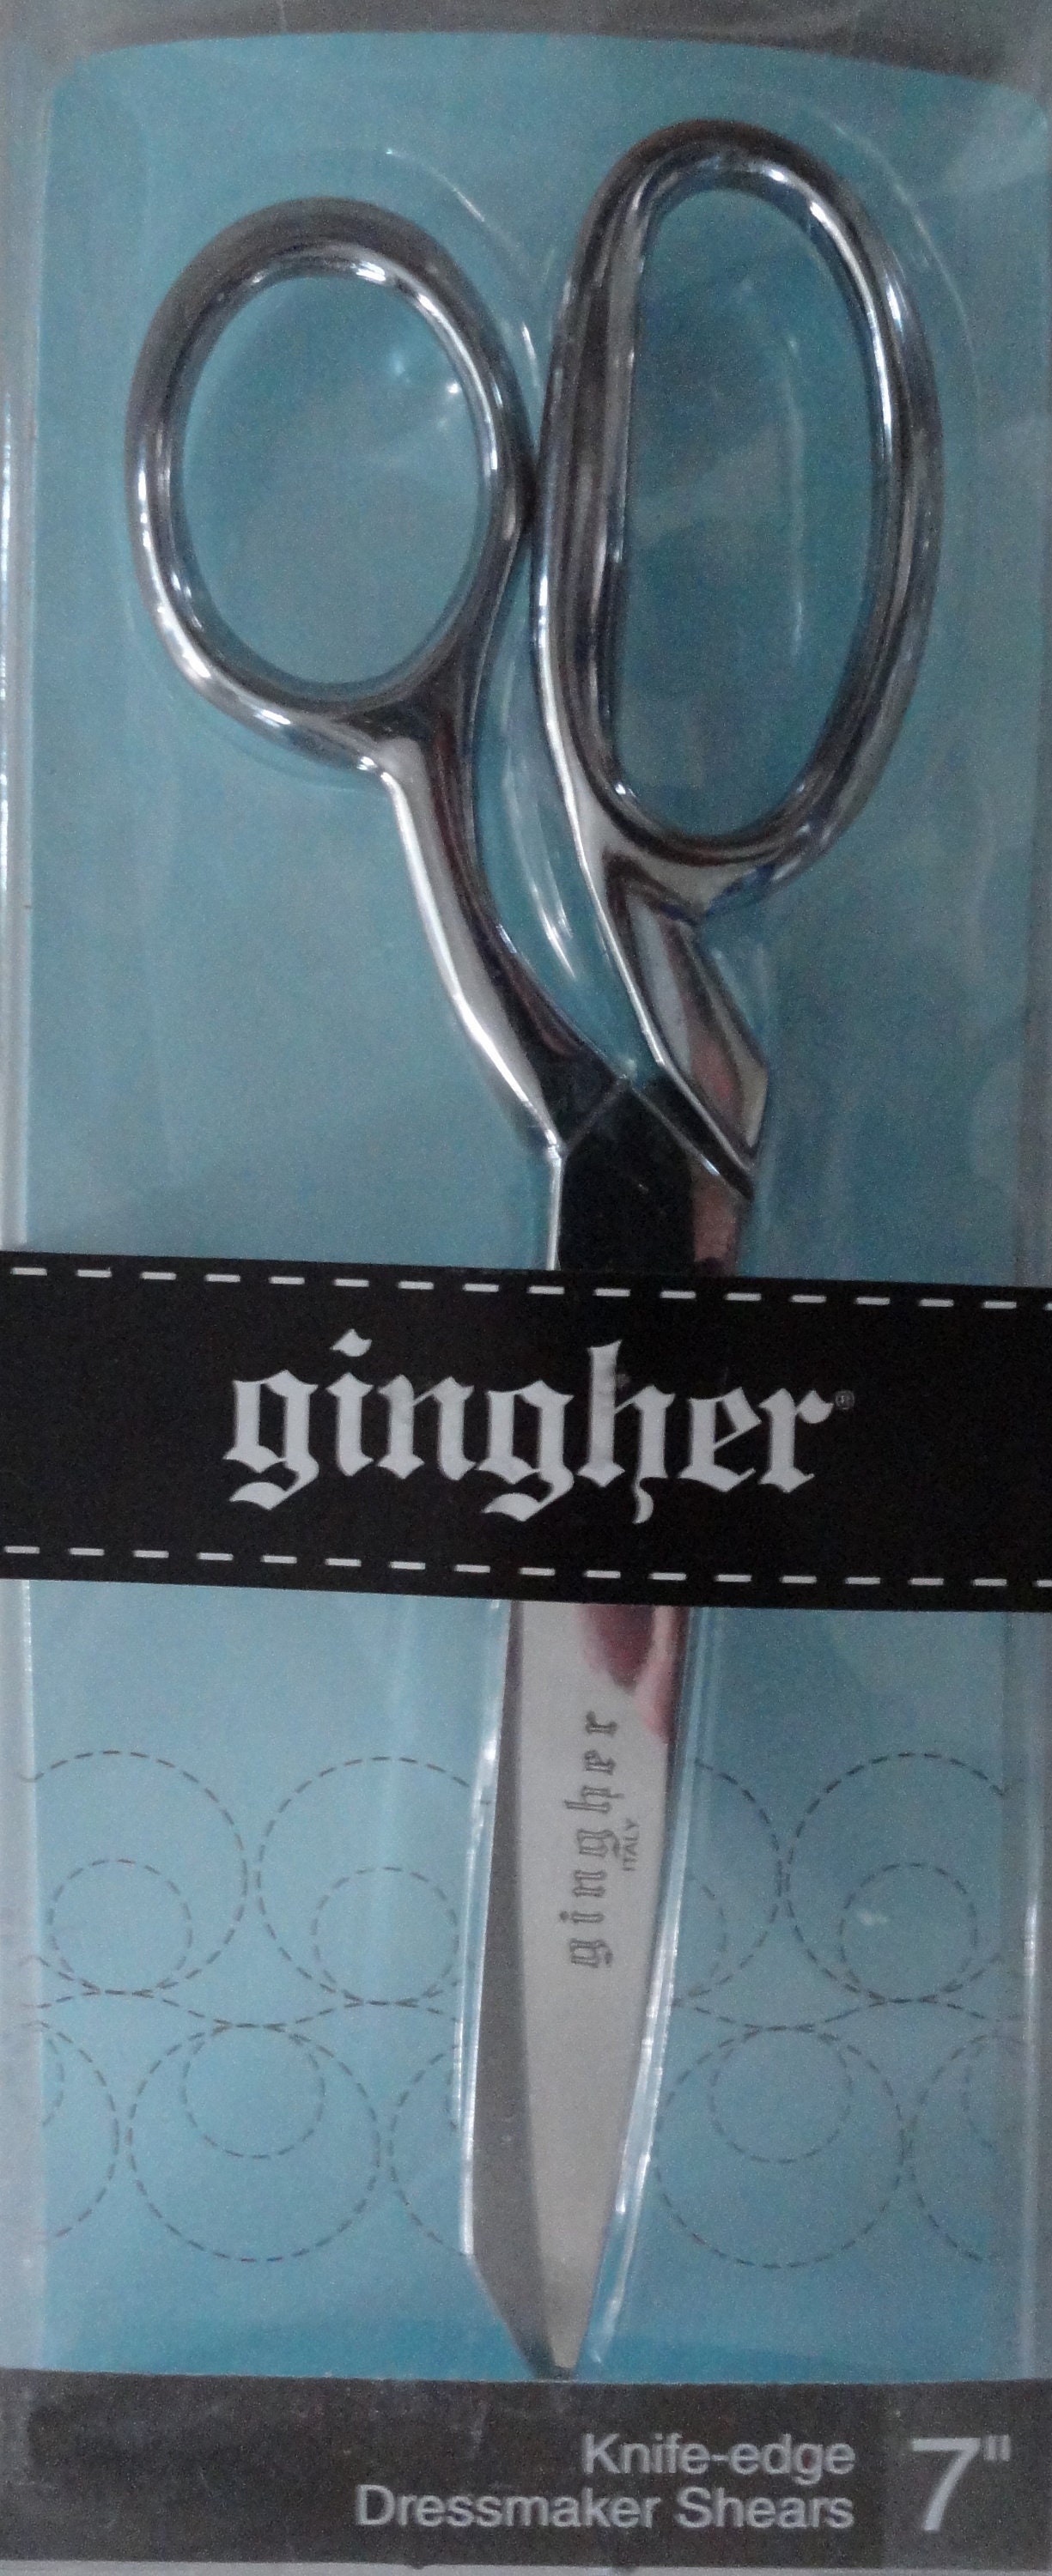 Gingher 7 Knife-edge Dressmaker Shears, Sewing Scissors, Knife